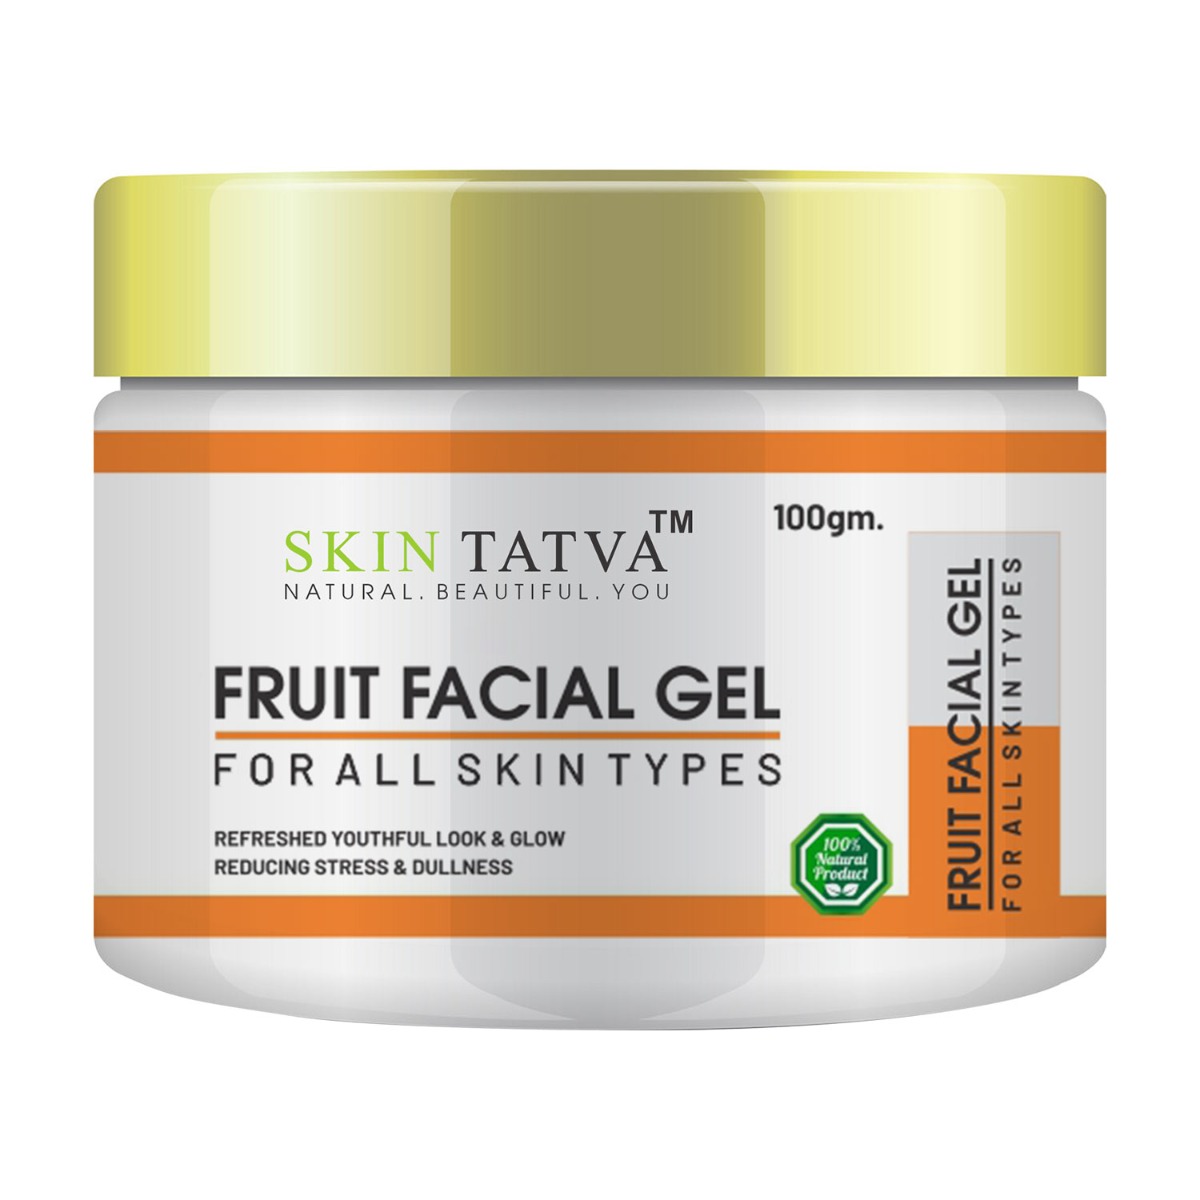 Skin Tatva Fruit Facial Gel, 100gm